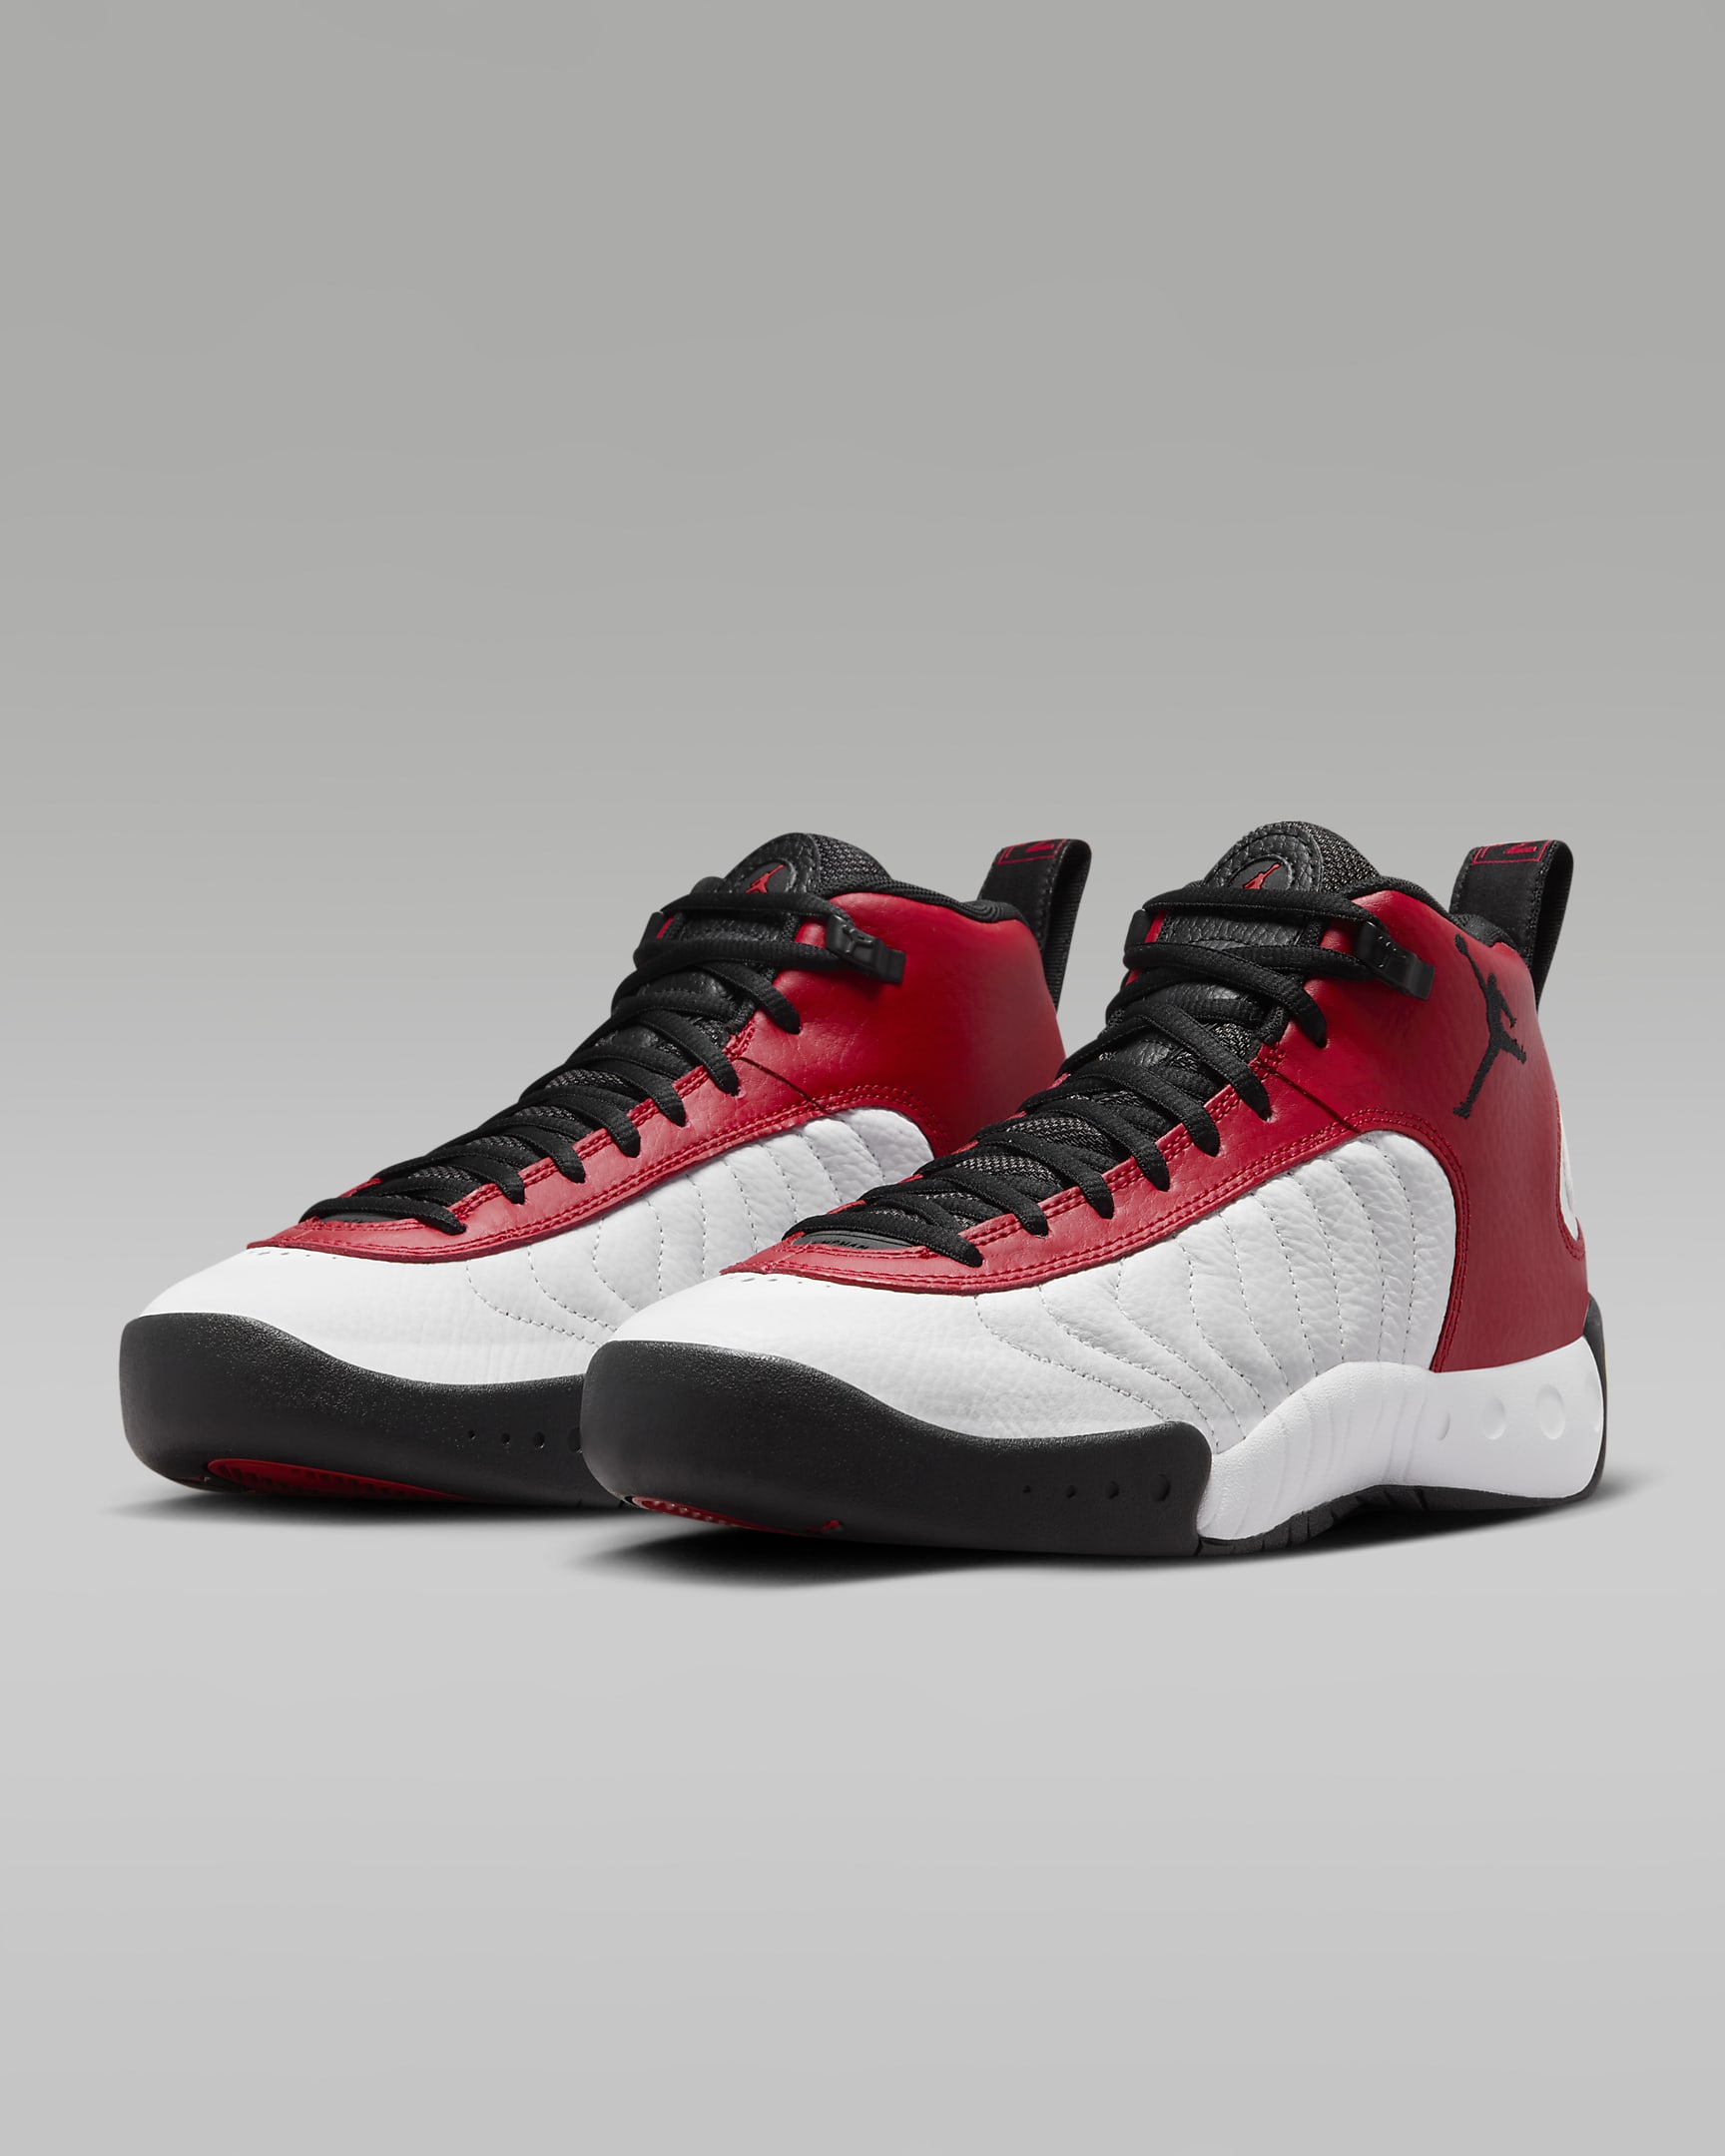 Nike Men's Jordan Jumpman Pro Shoes $76 + Free Shipping